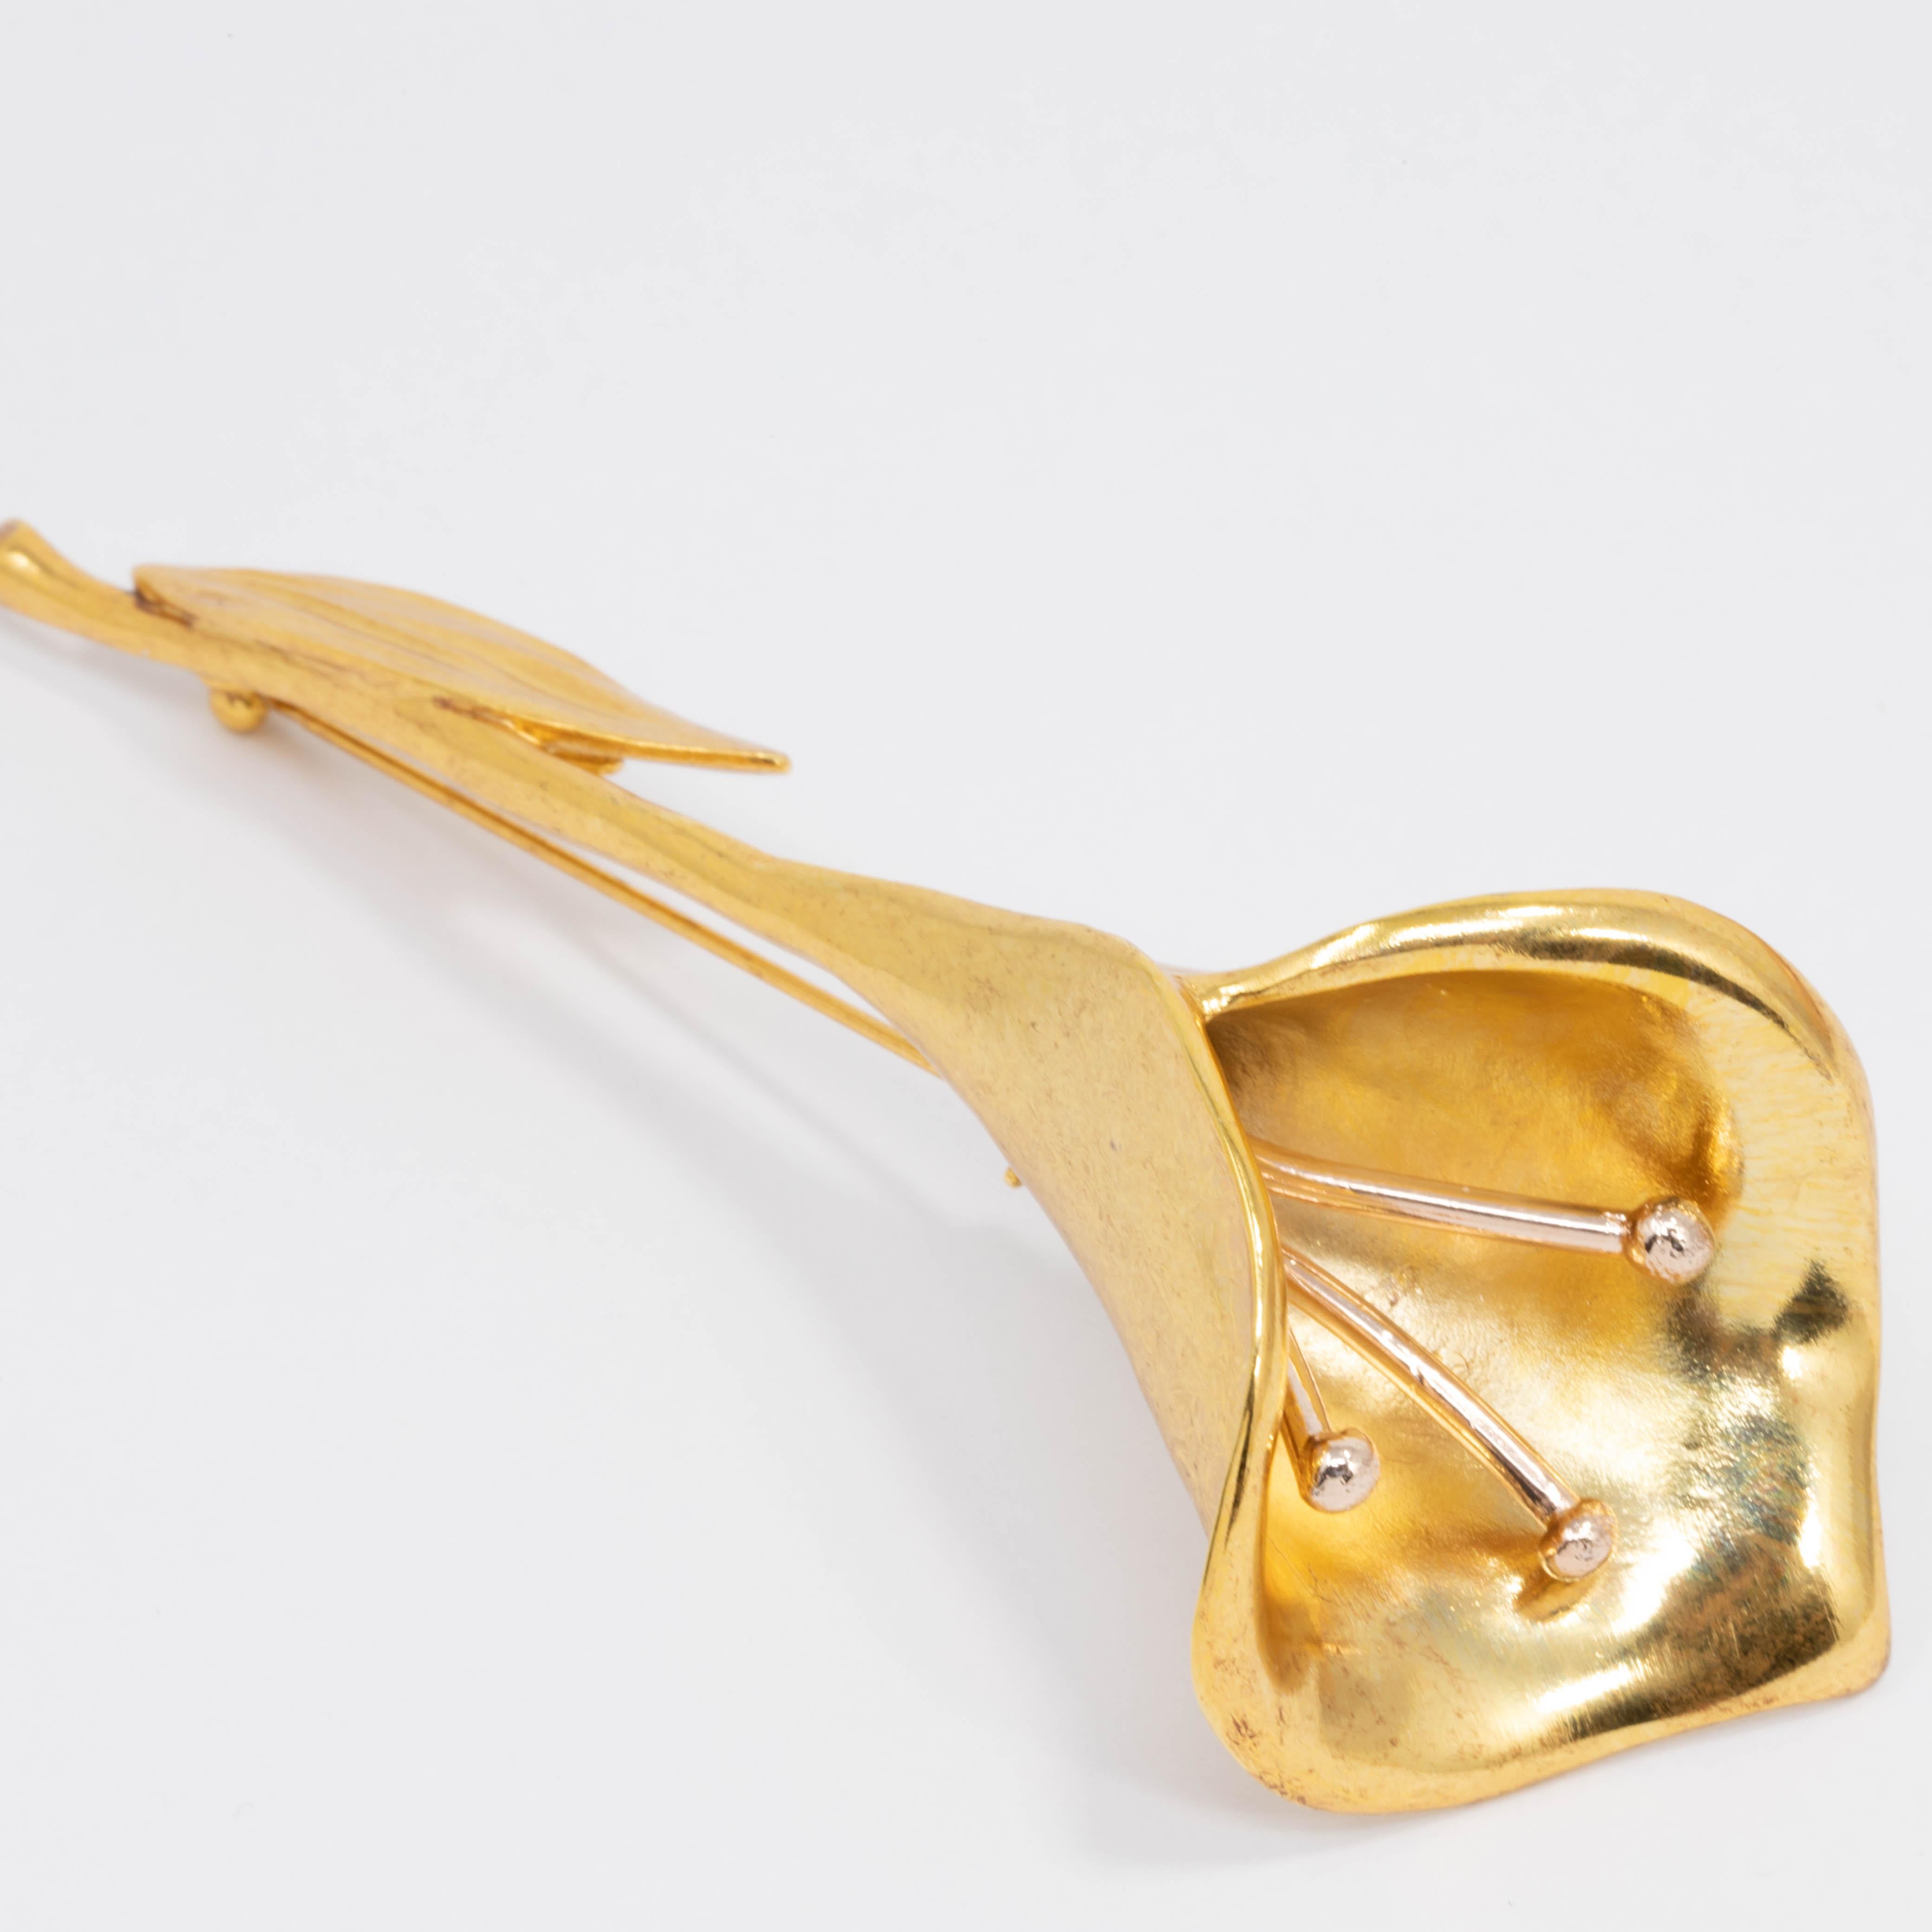 Flower chic pin brooch by Oscar de la Renta. A glowing calla lily in gold.

Gold plated.

Tags, Marks, Hallmarks: Oscar de la Renta, Made in USA